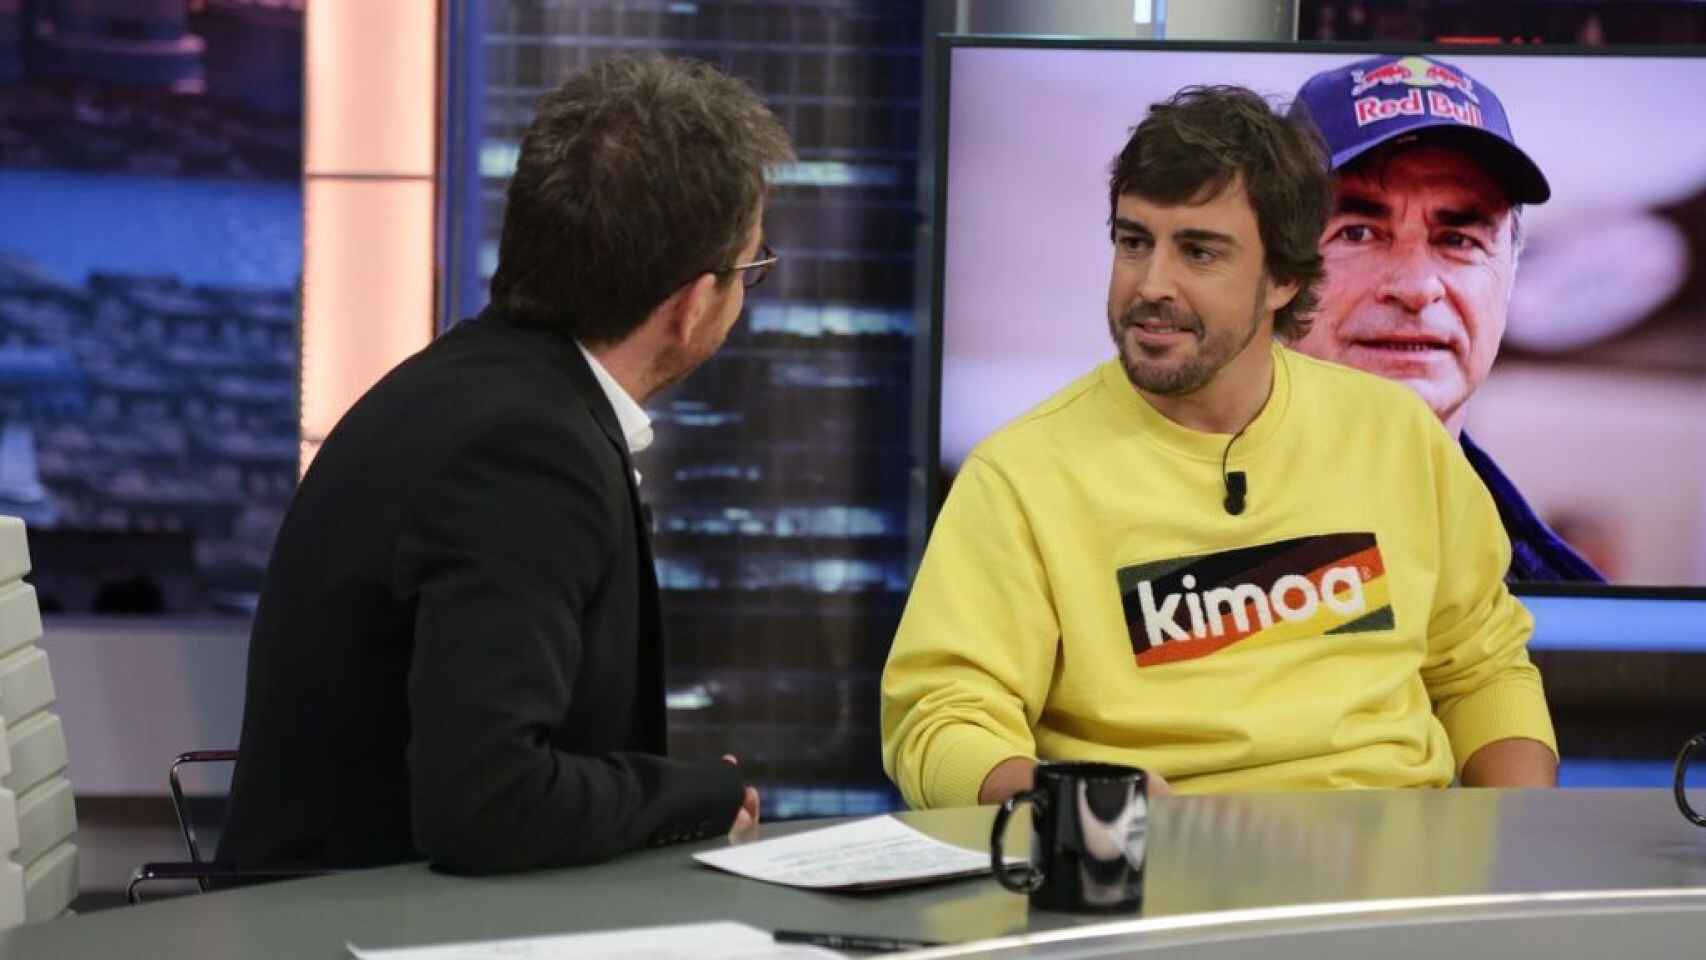 Pablo Motos regatea a Fernando Alonso descuento para su marca de ropa Kimoa